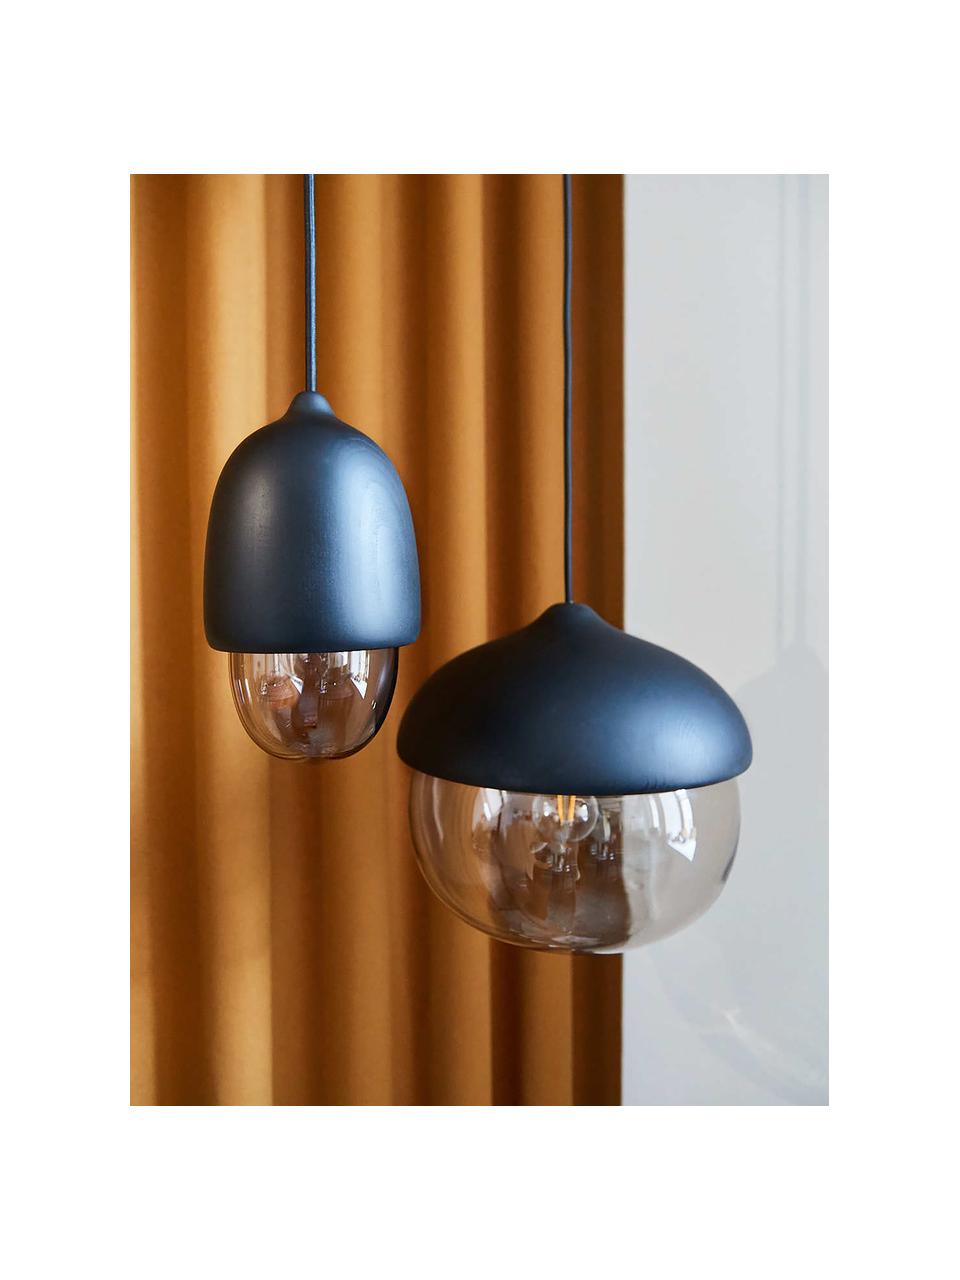 Hanglamp Terho in de eikelvorm, mondgeblazen, Zwart, greige, Ø 31 x H 30 cm